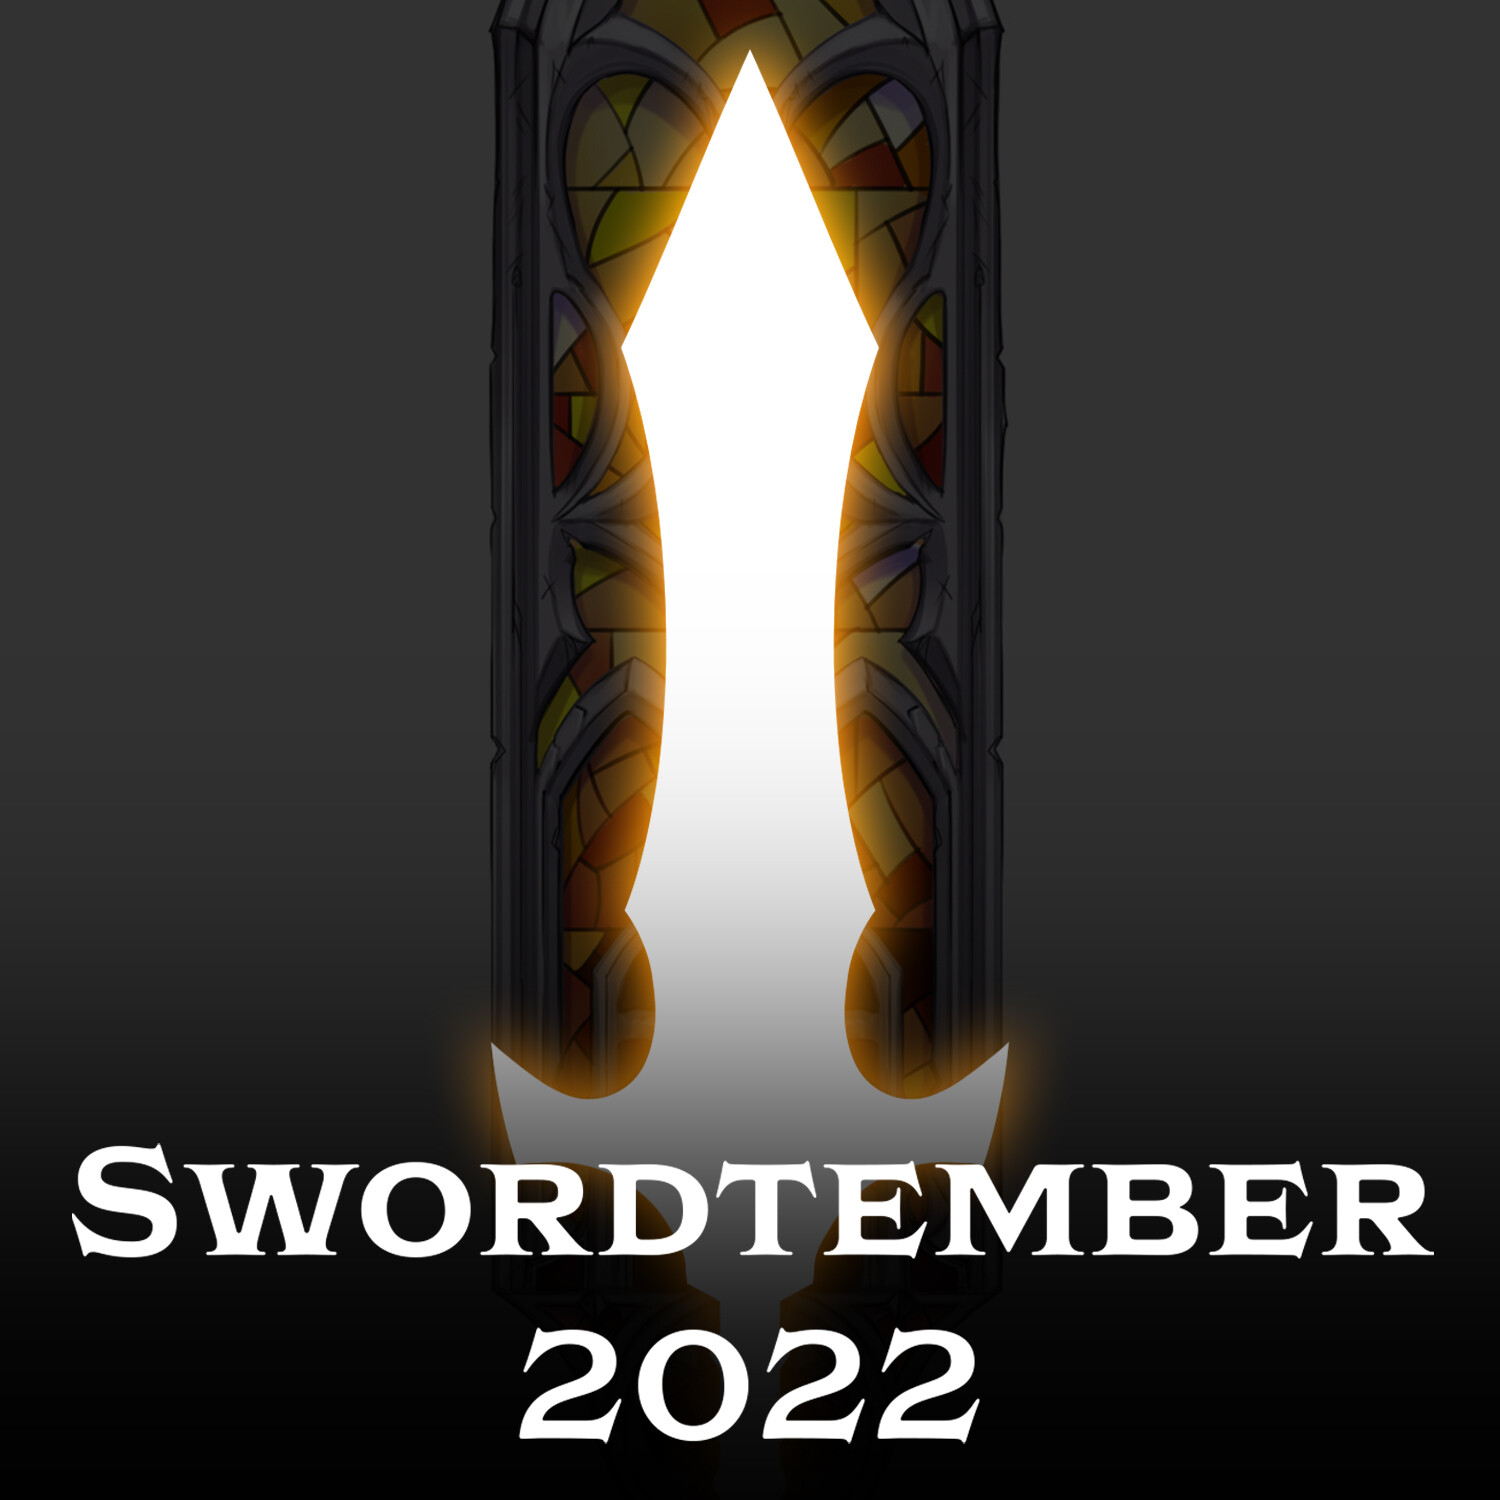 Swordtember 2022